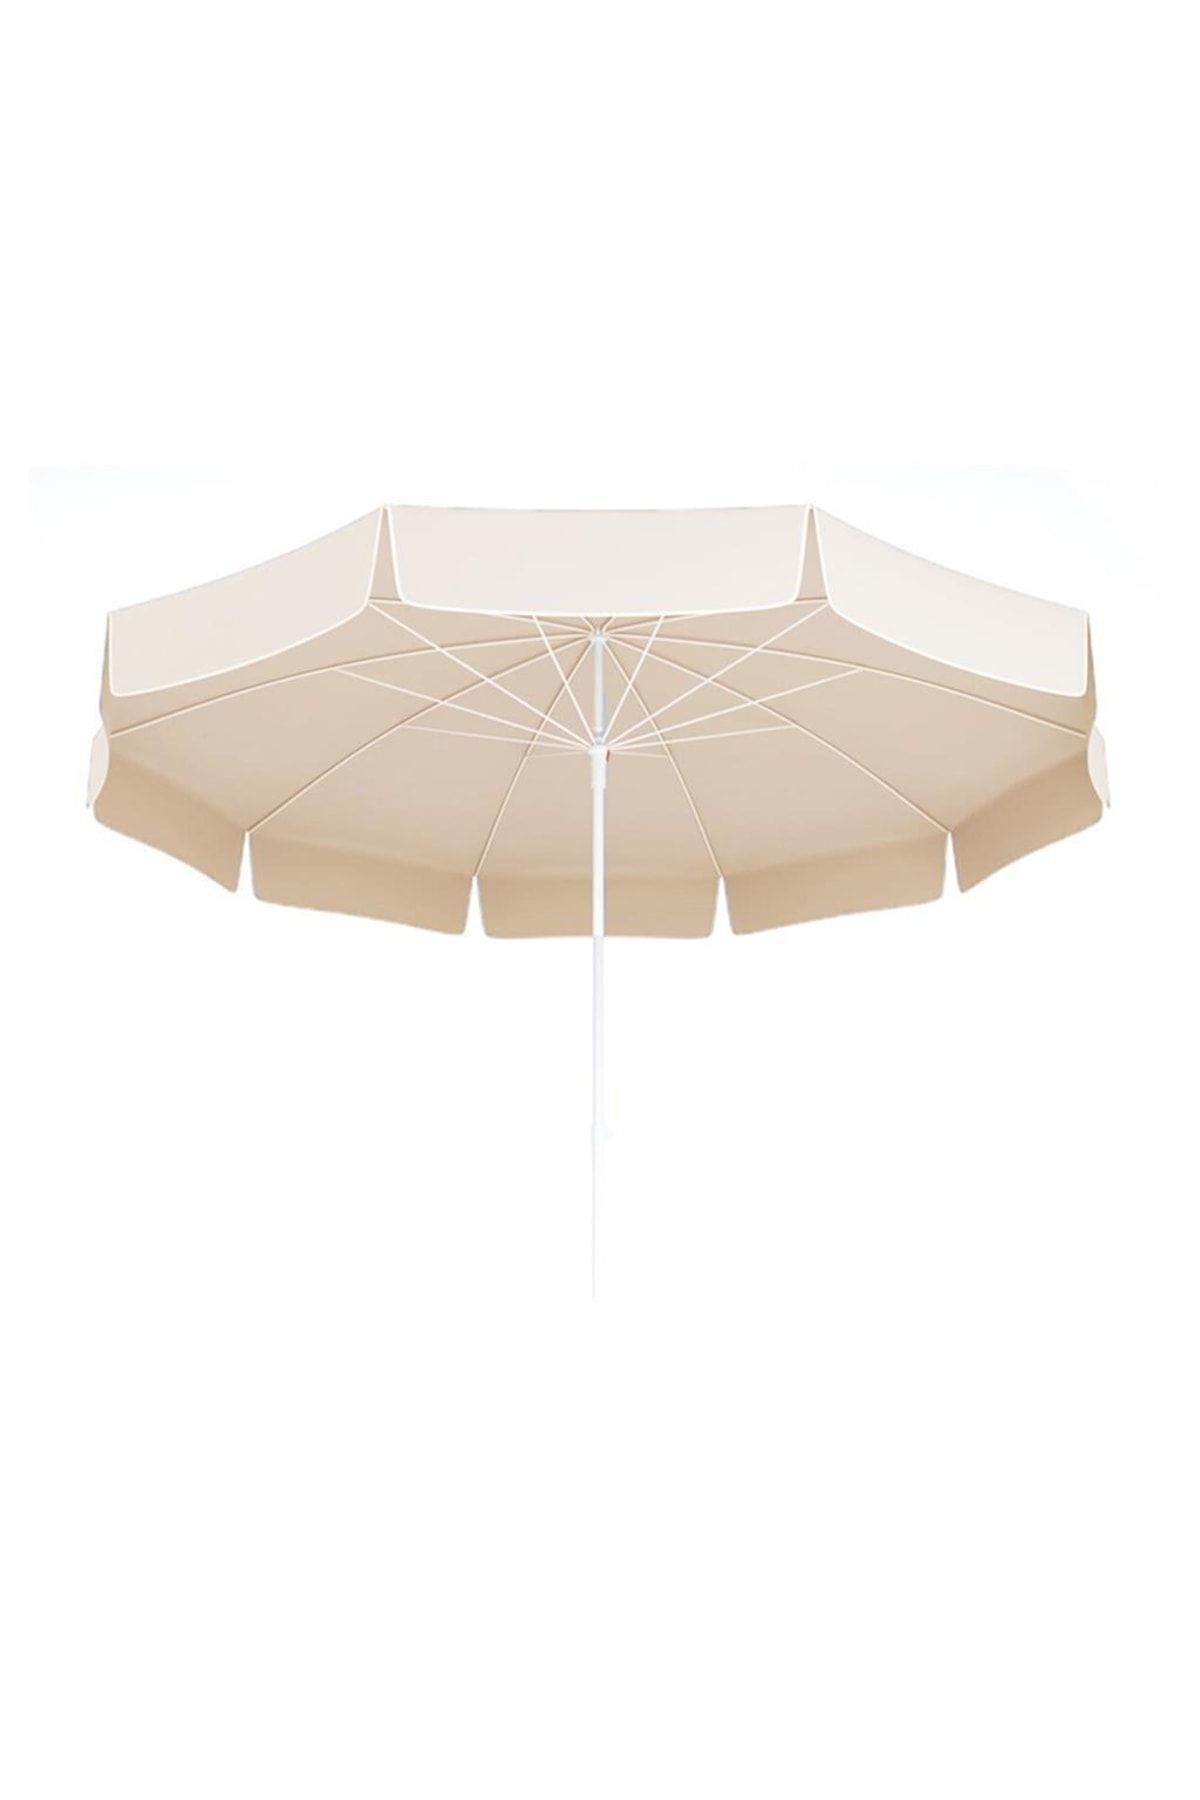 Mashotrend 2 Metre Tek Renk Polyester Kumaş Plaj Şemsiyesi - 2 Metre Balkon Şemsiyesi - Bahçe Şemsiyesi